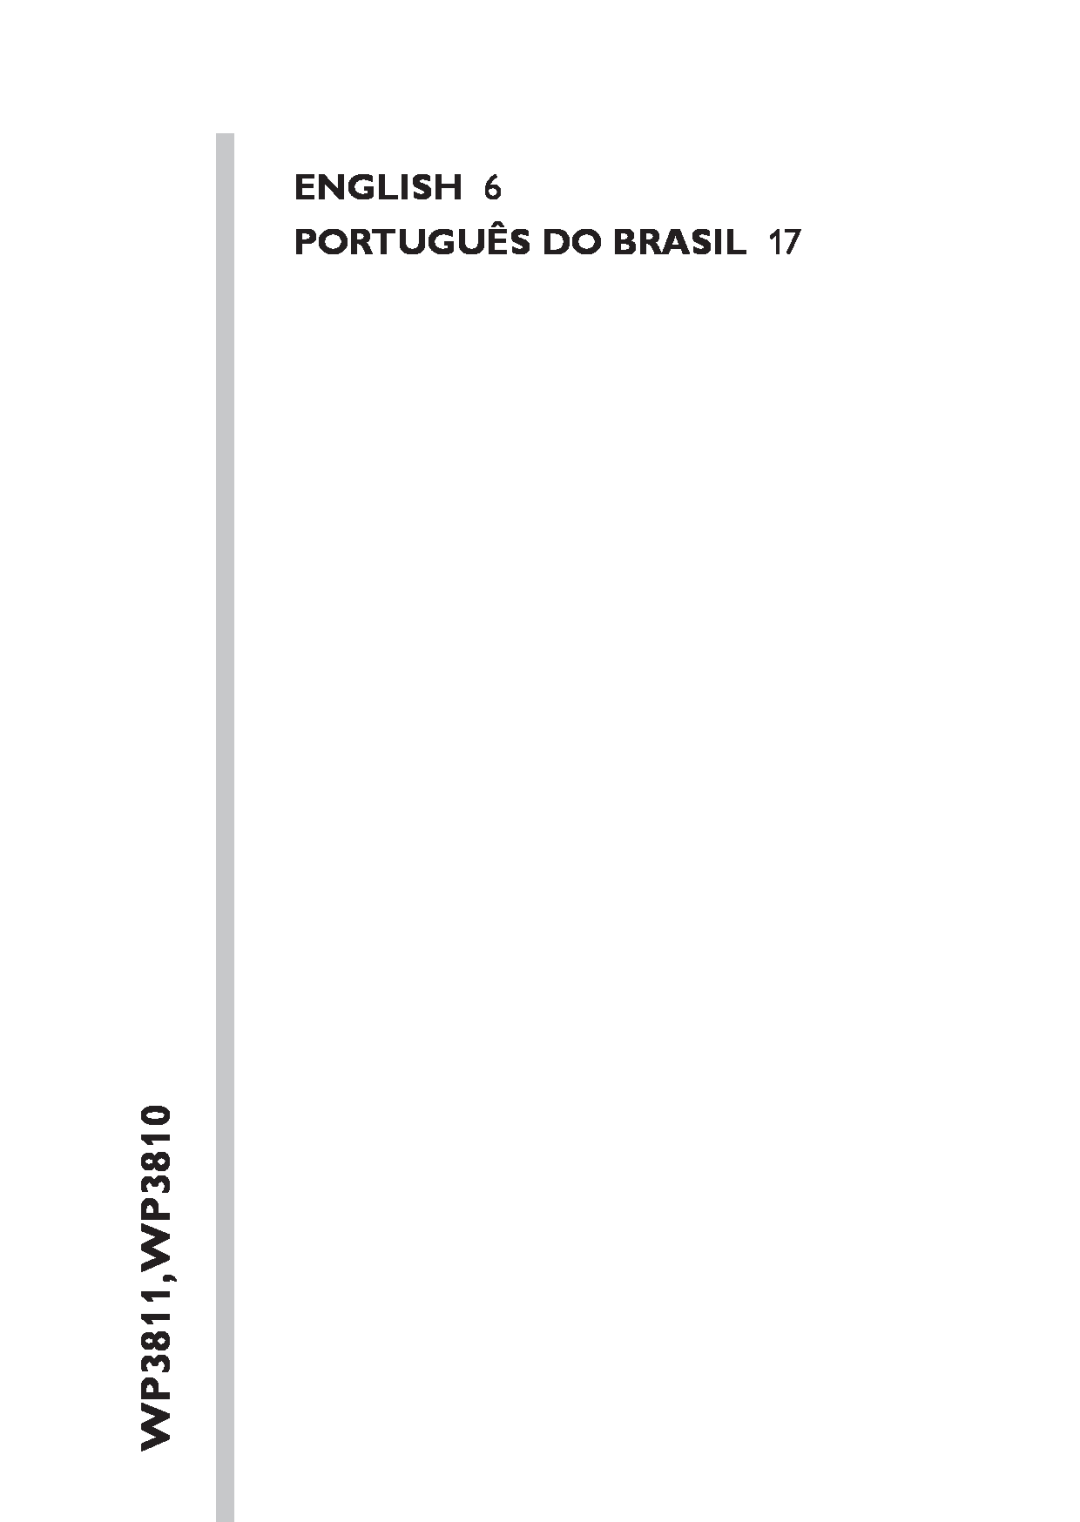 Philips manual English Português do Brasil, WP3811,WP3810 